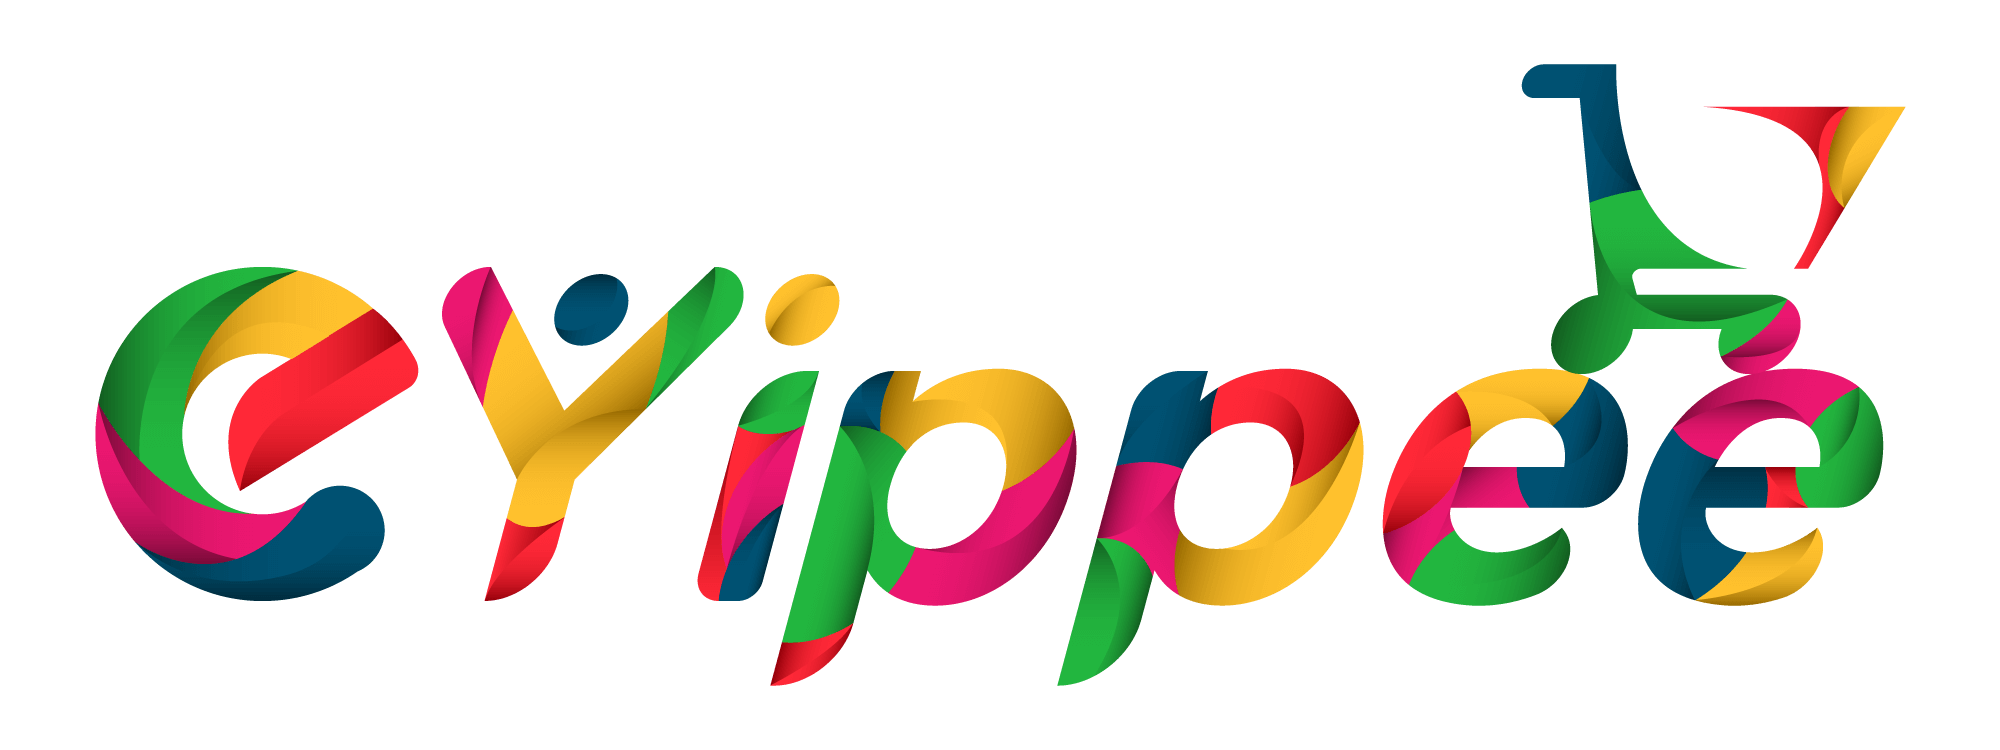 eYippee Logo